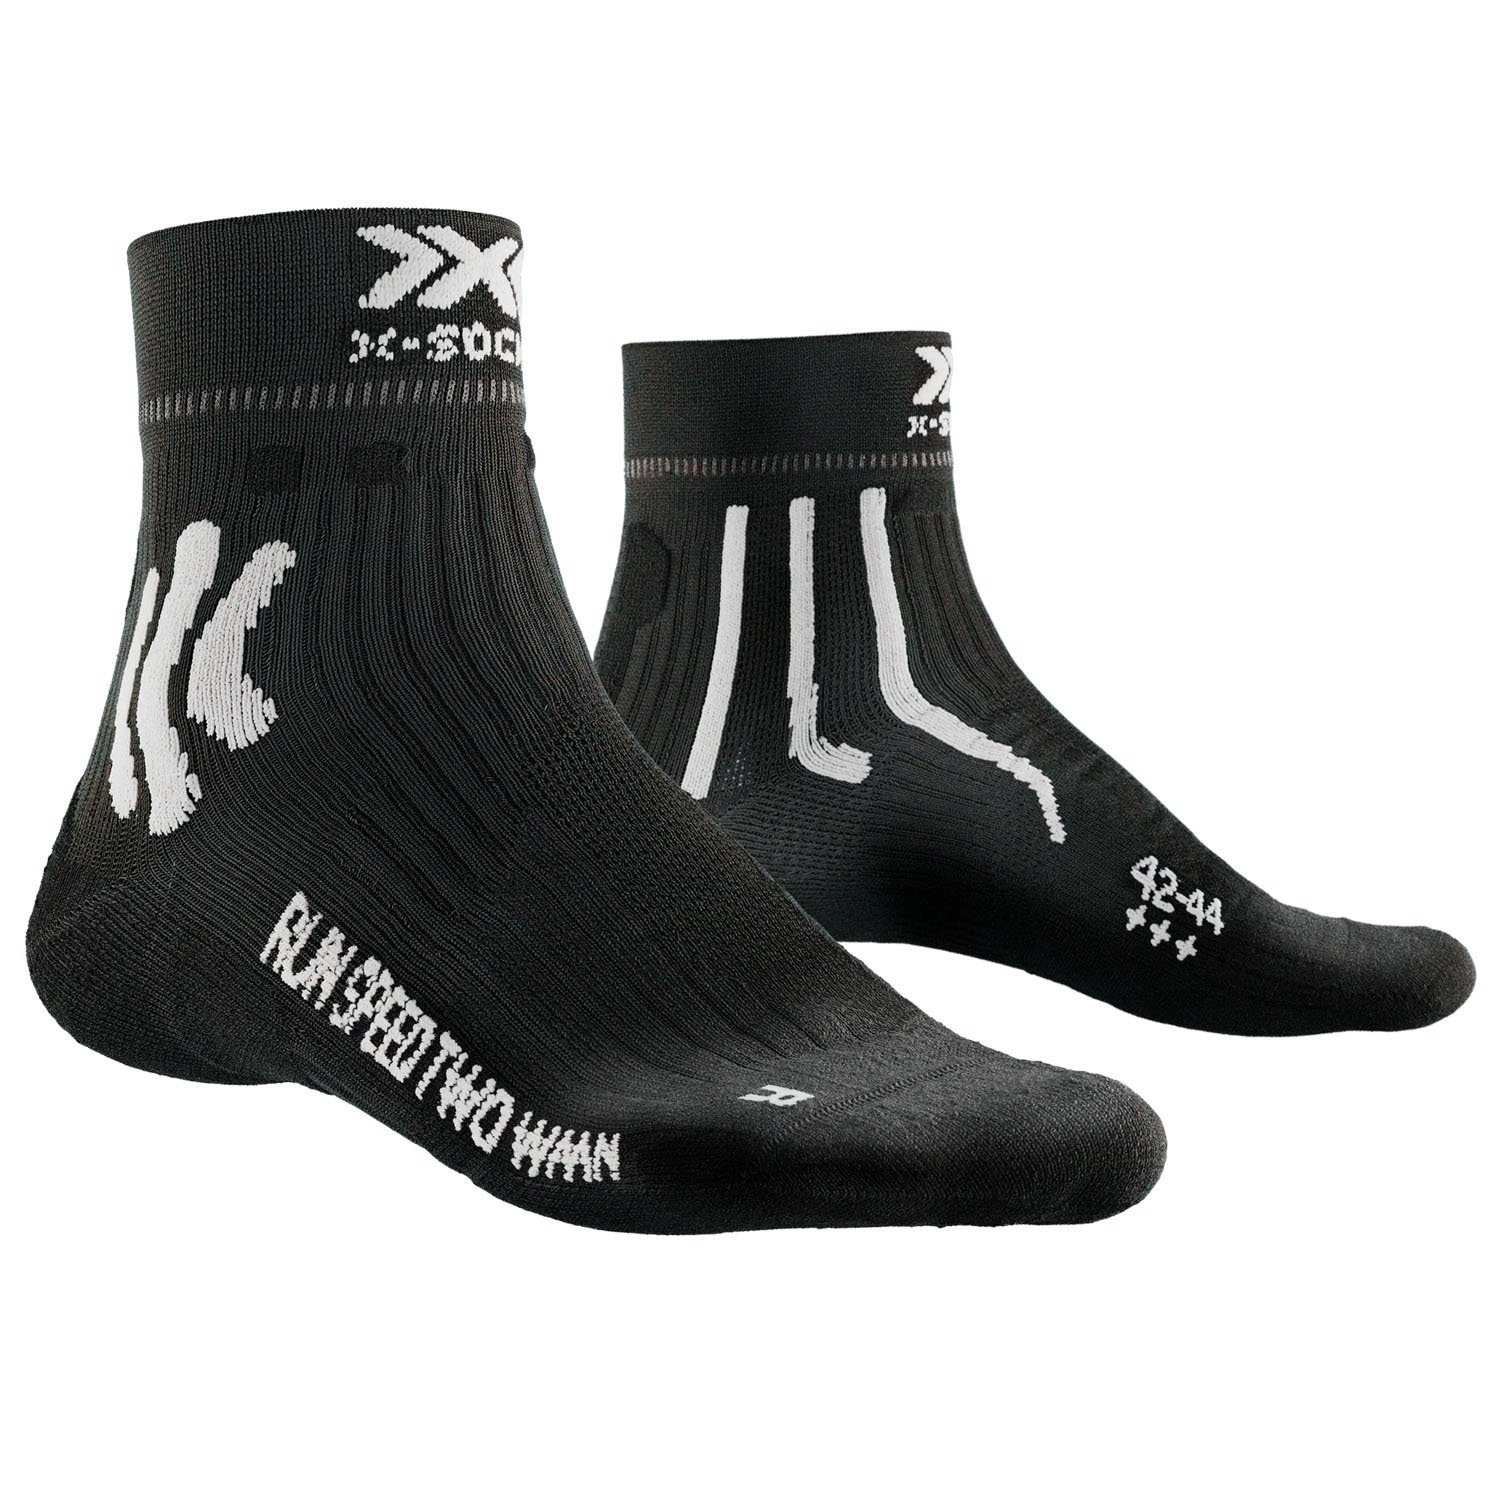 X-Bionic X-Socks:Registered: Run Speed Two 4.0 Kadın Çorap - Siyah - 1